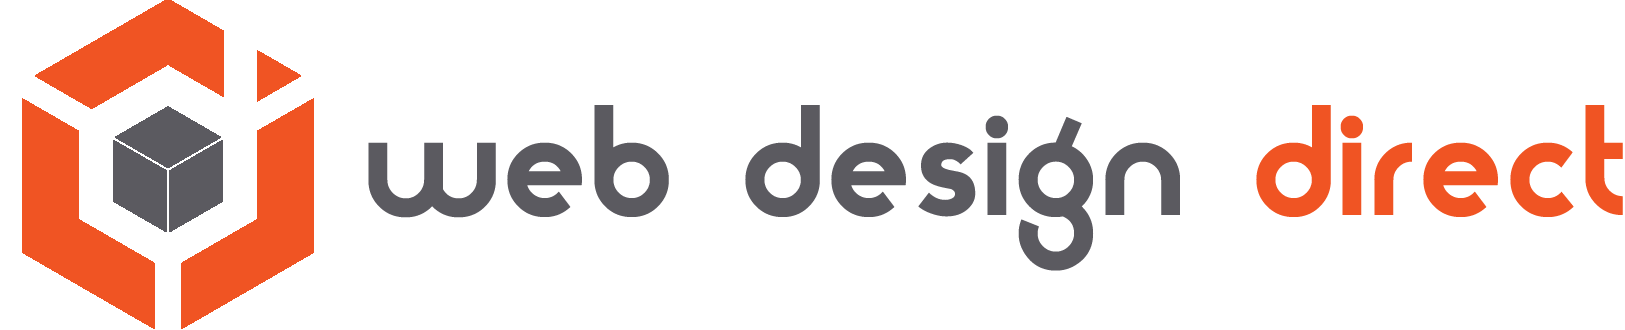 web-design-direct-logo